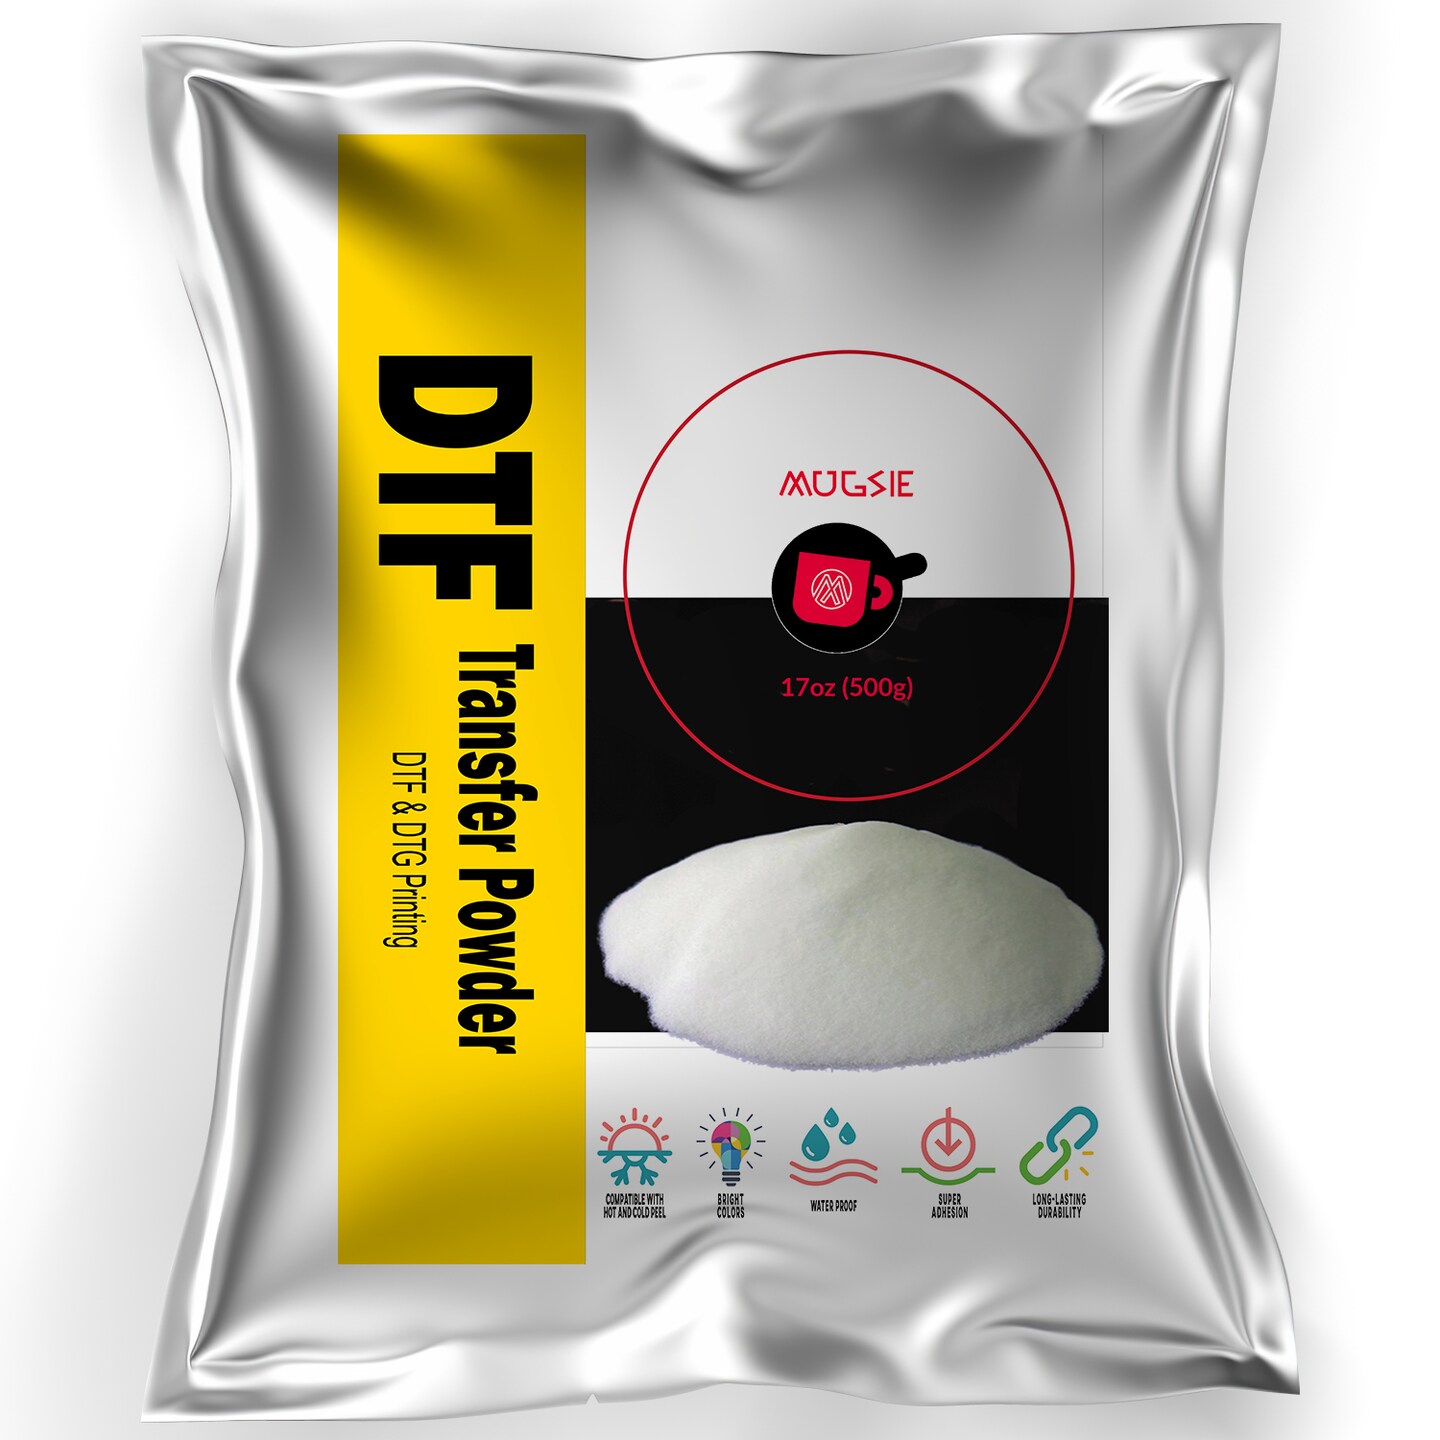 DTF Transfer Powder - 500g / 17.6oz White Hot Melt Adhesive for